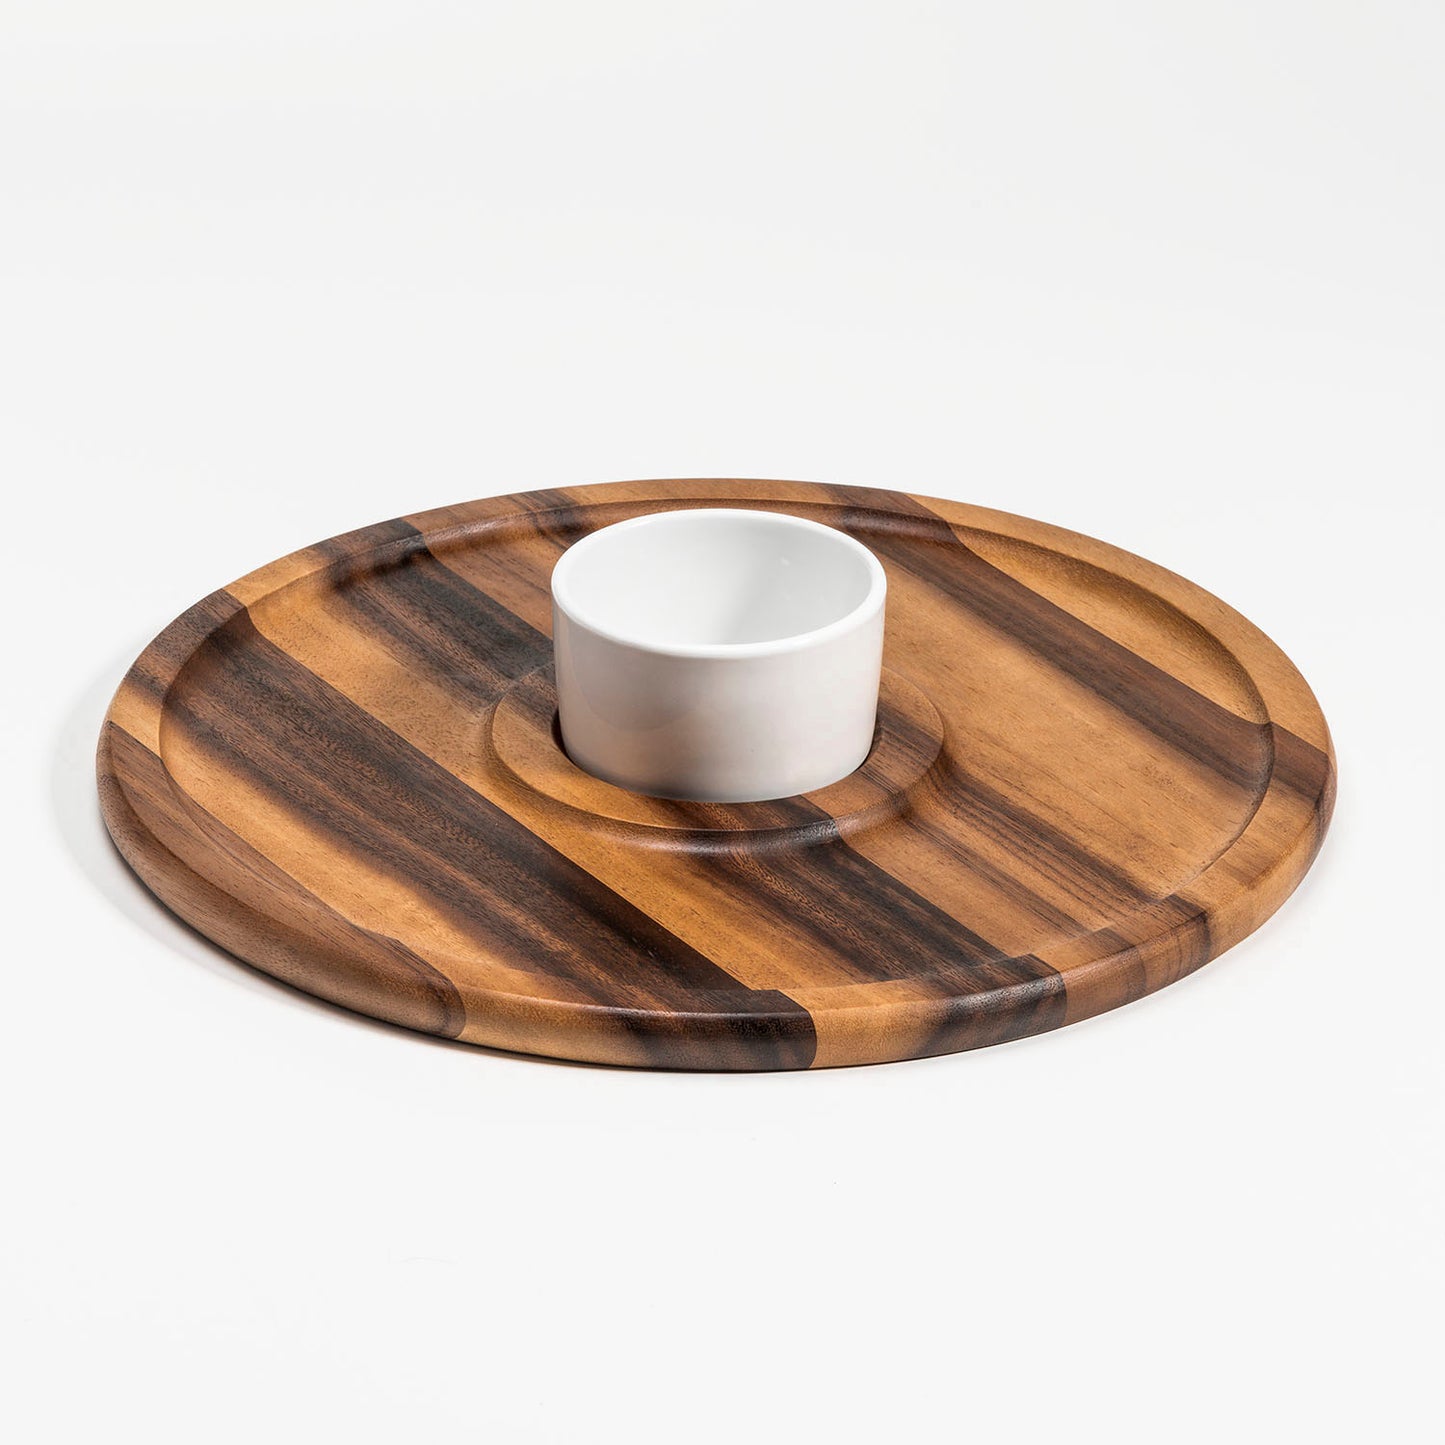 Large Wood Tray with Ceramic Dip Bowl